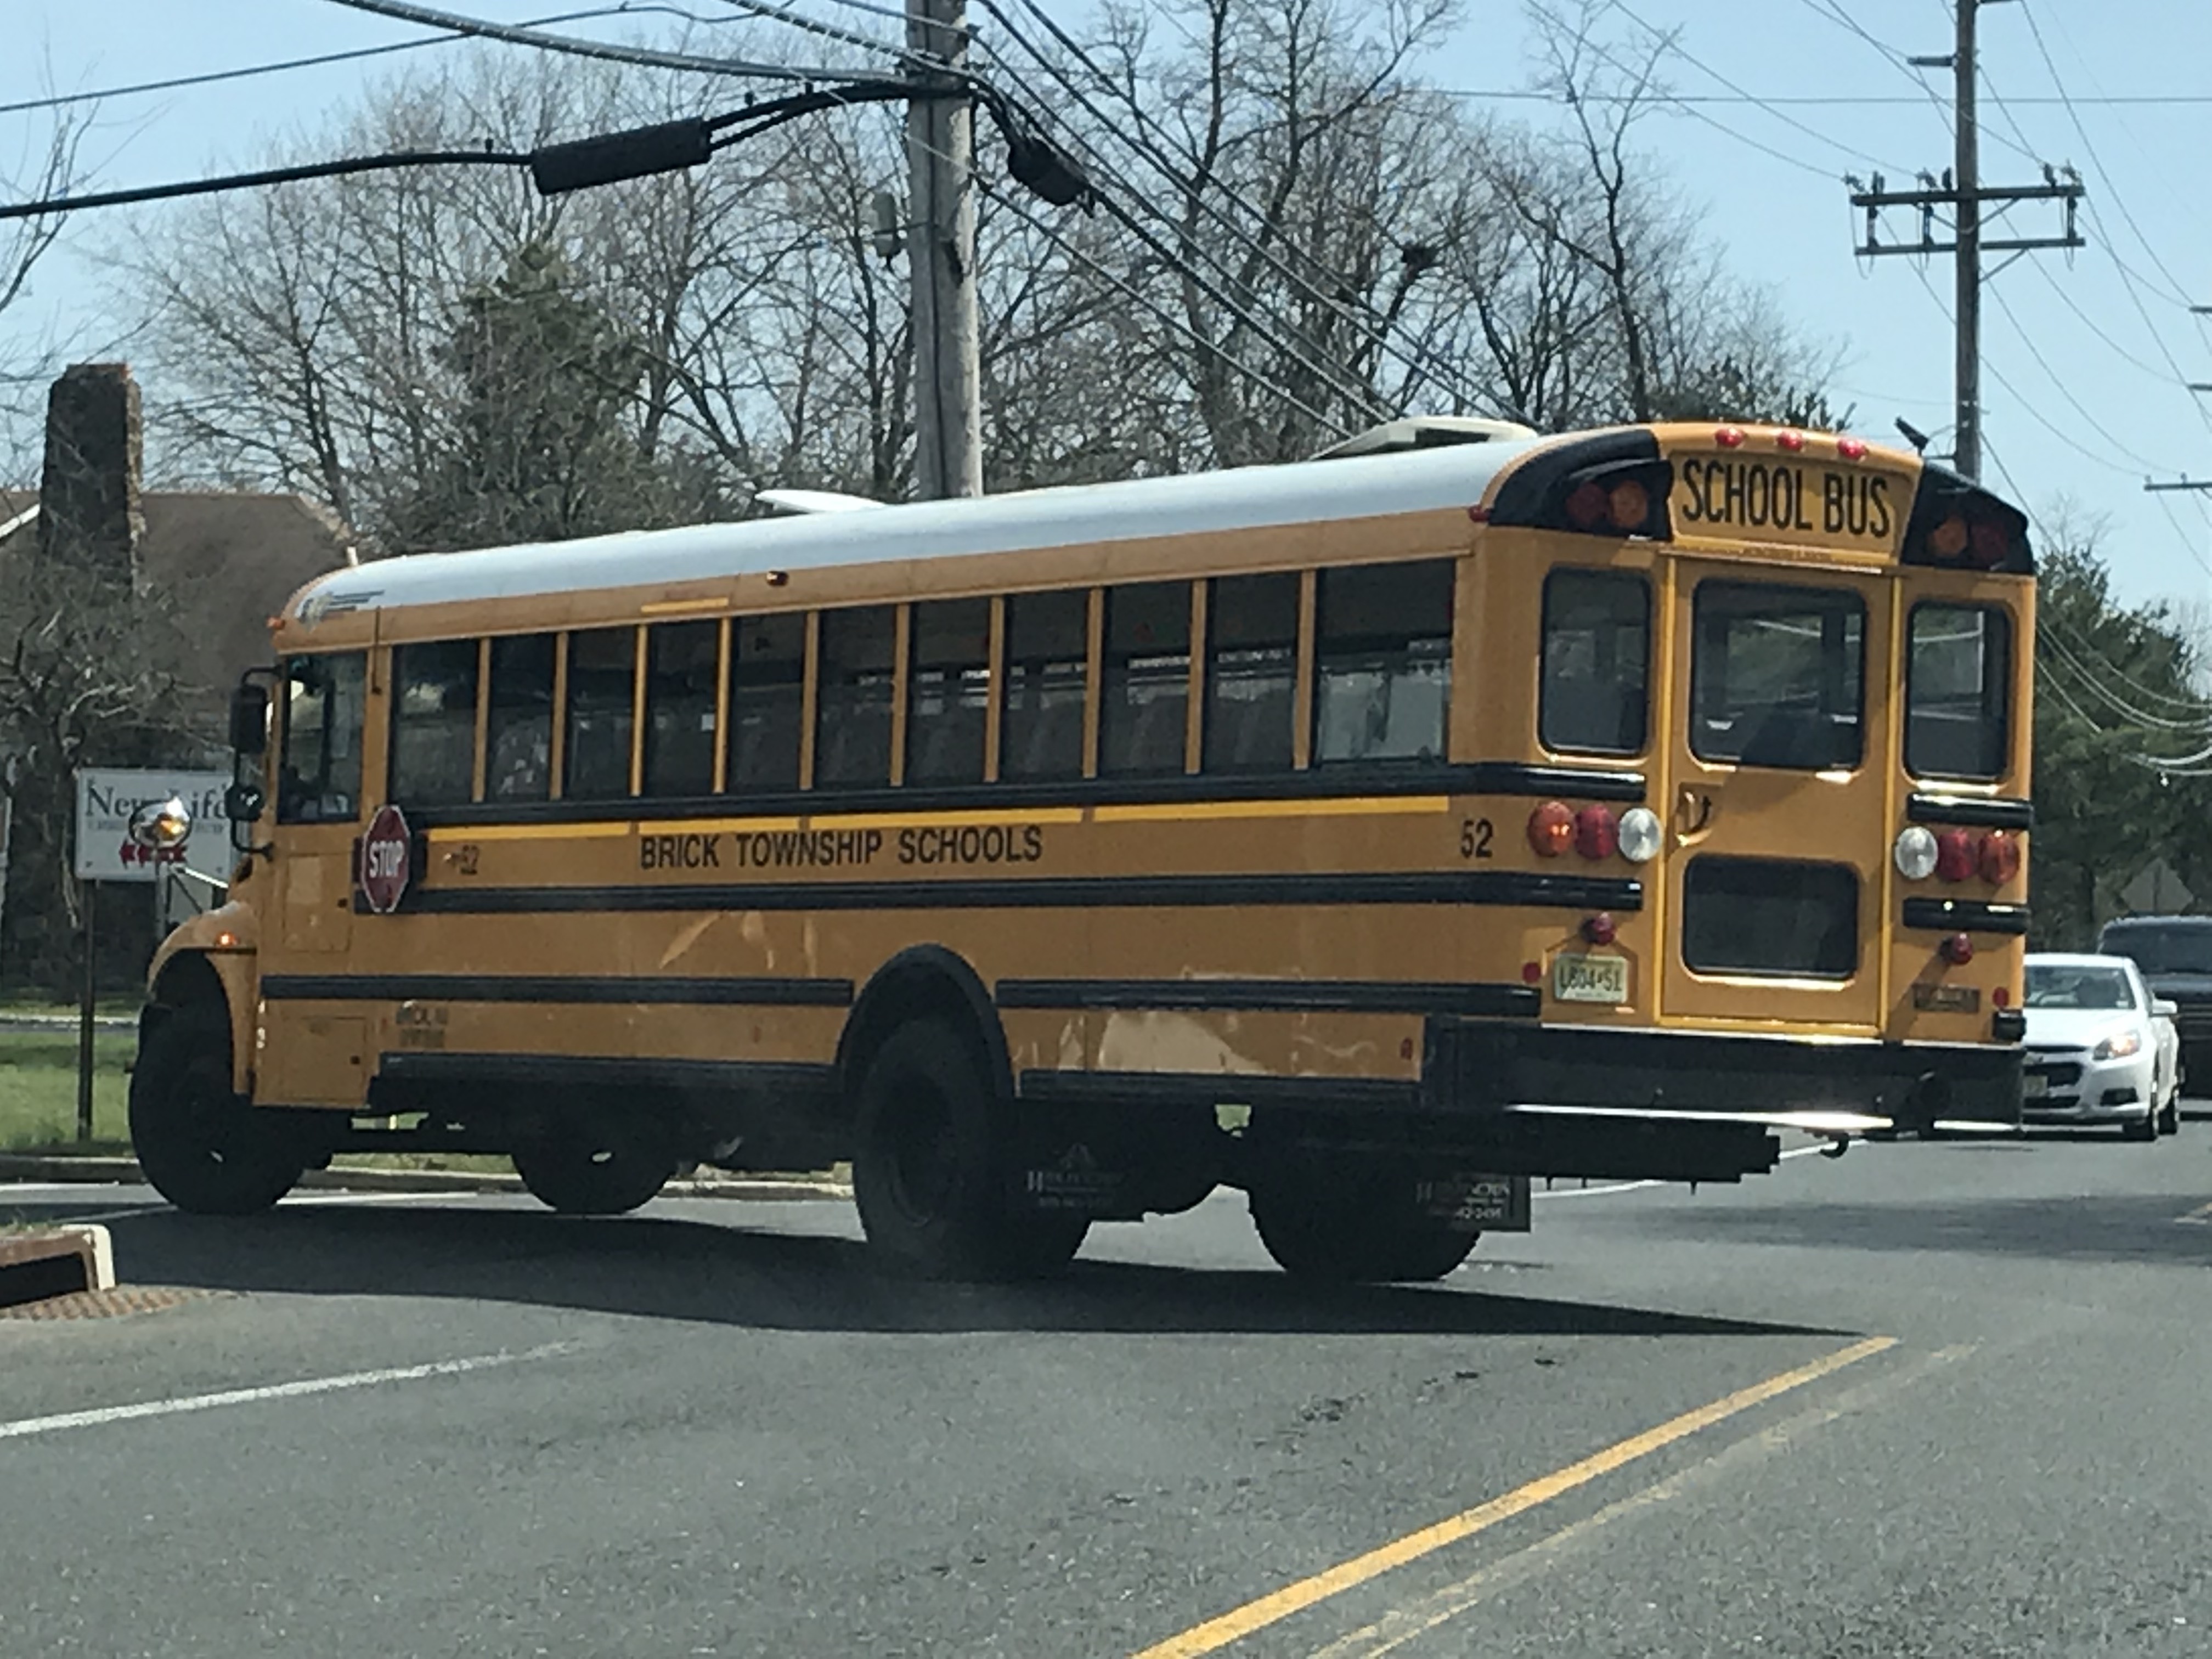 A Brick Township school bus. (Photo: Daniel Nee)